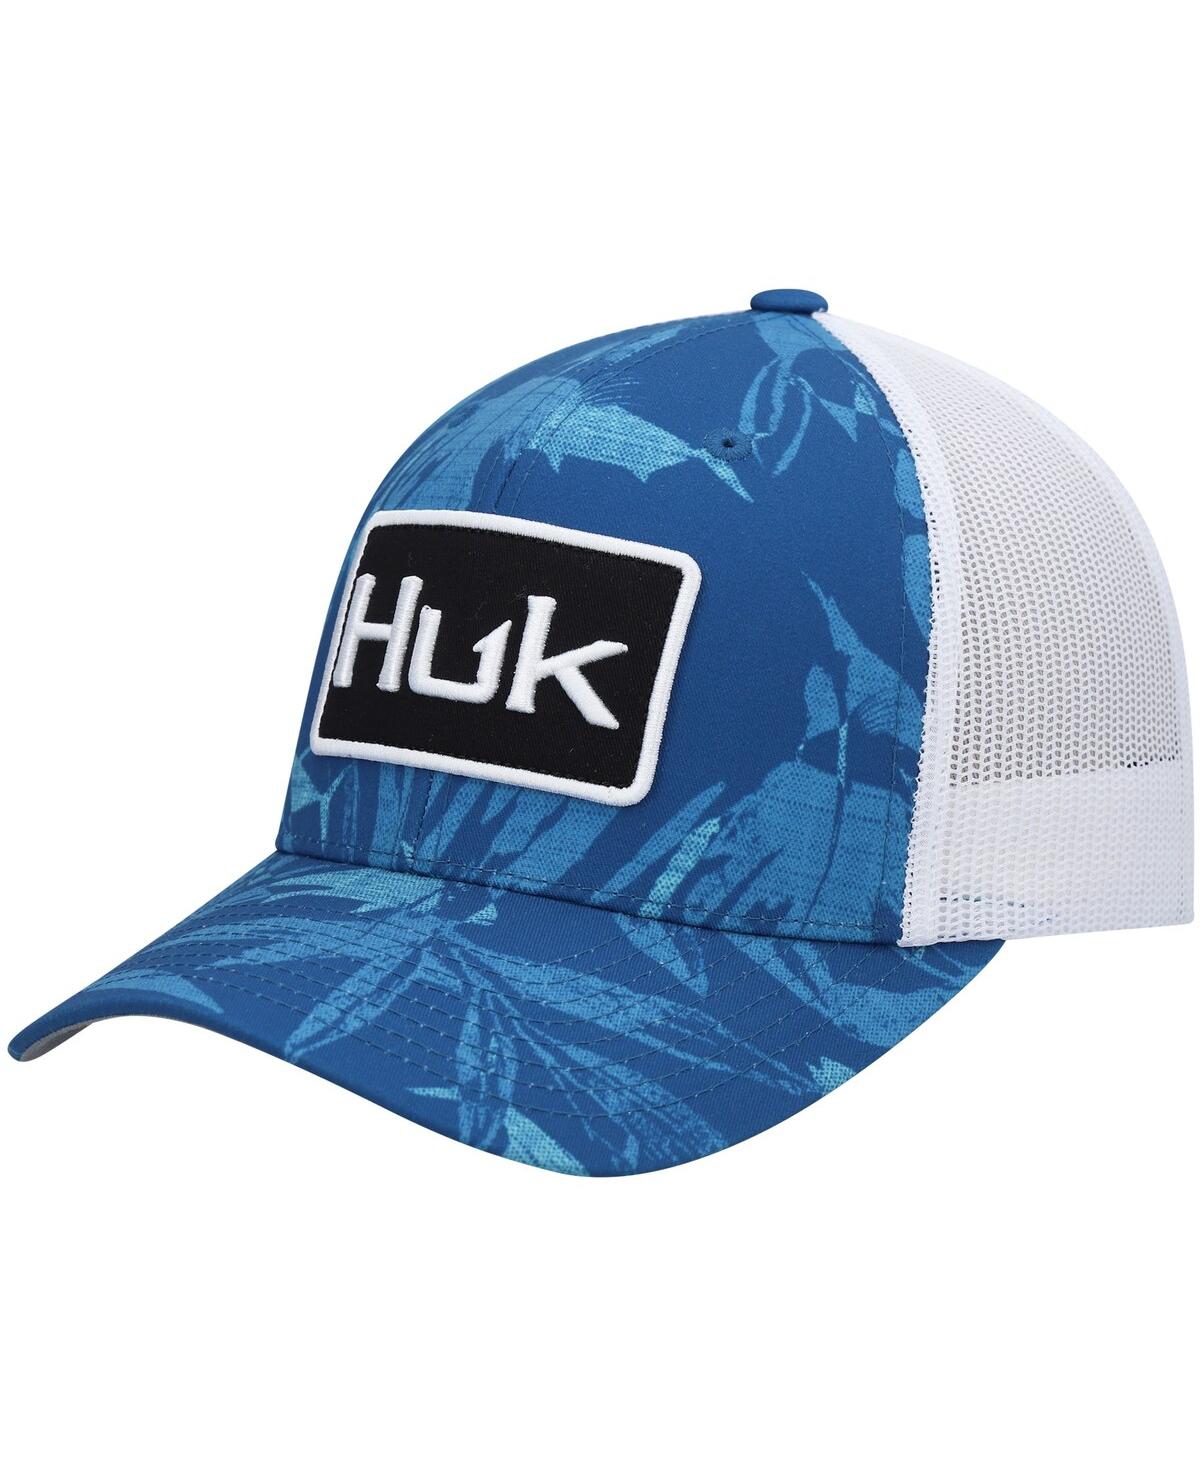 Men's Huk Blue Ocean Palm Trucker Snapback Hat - Blue